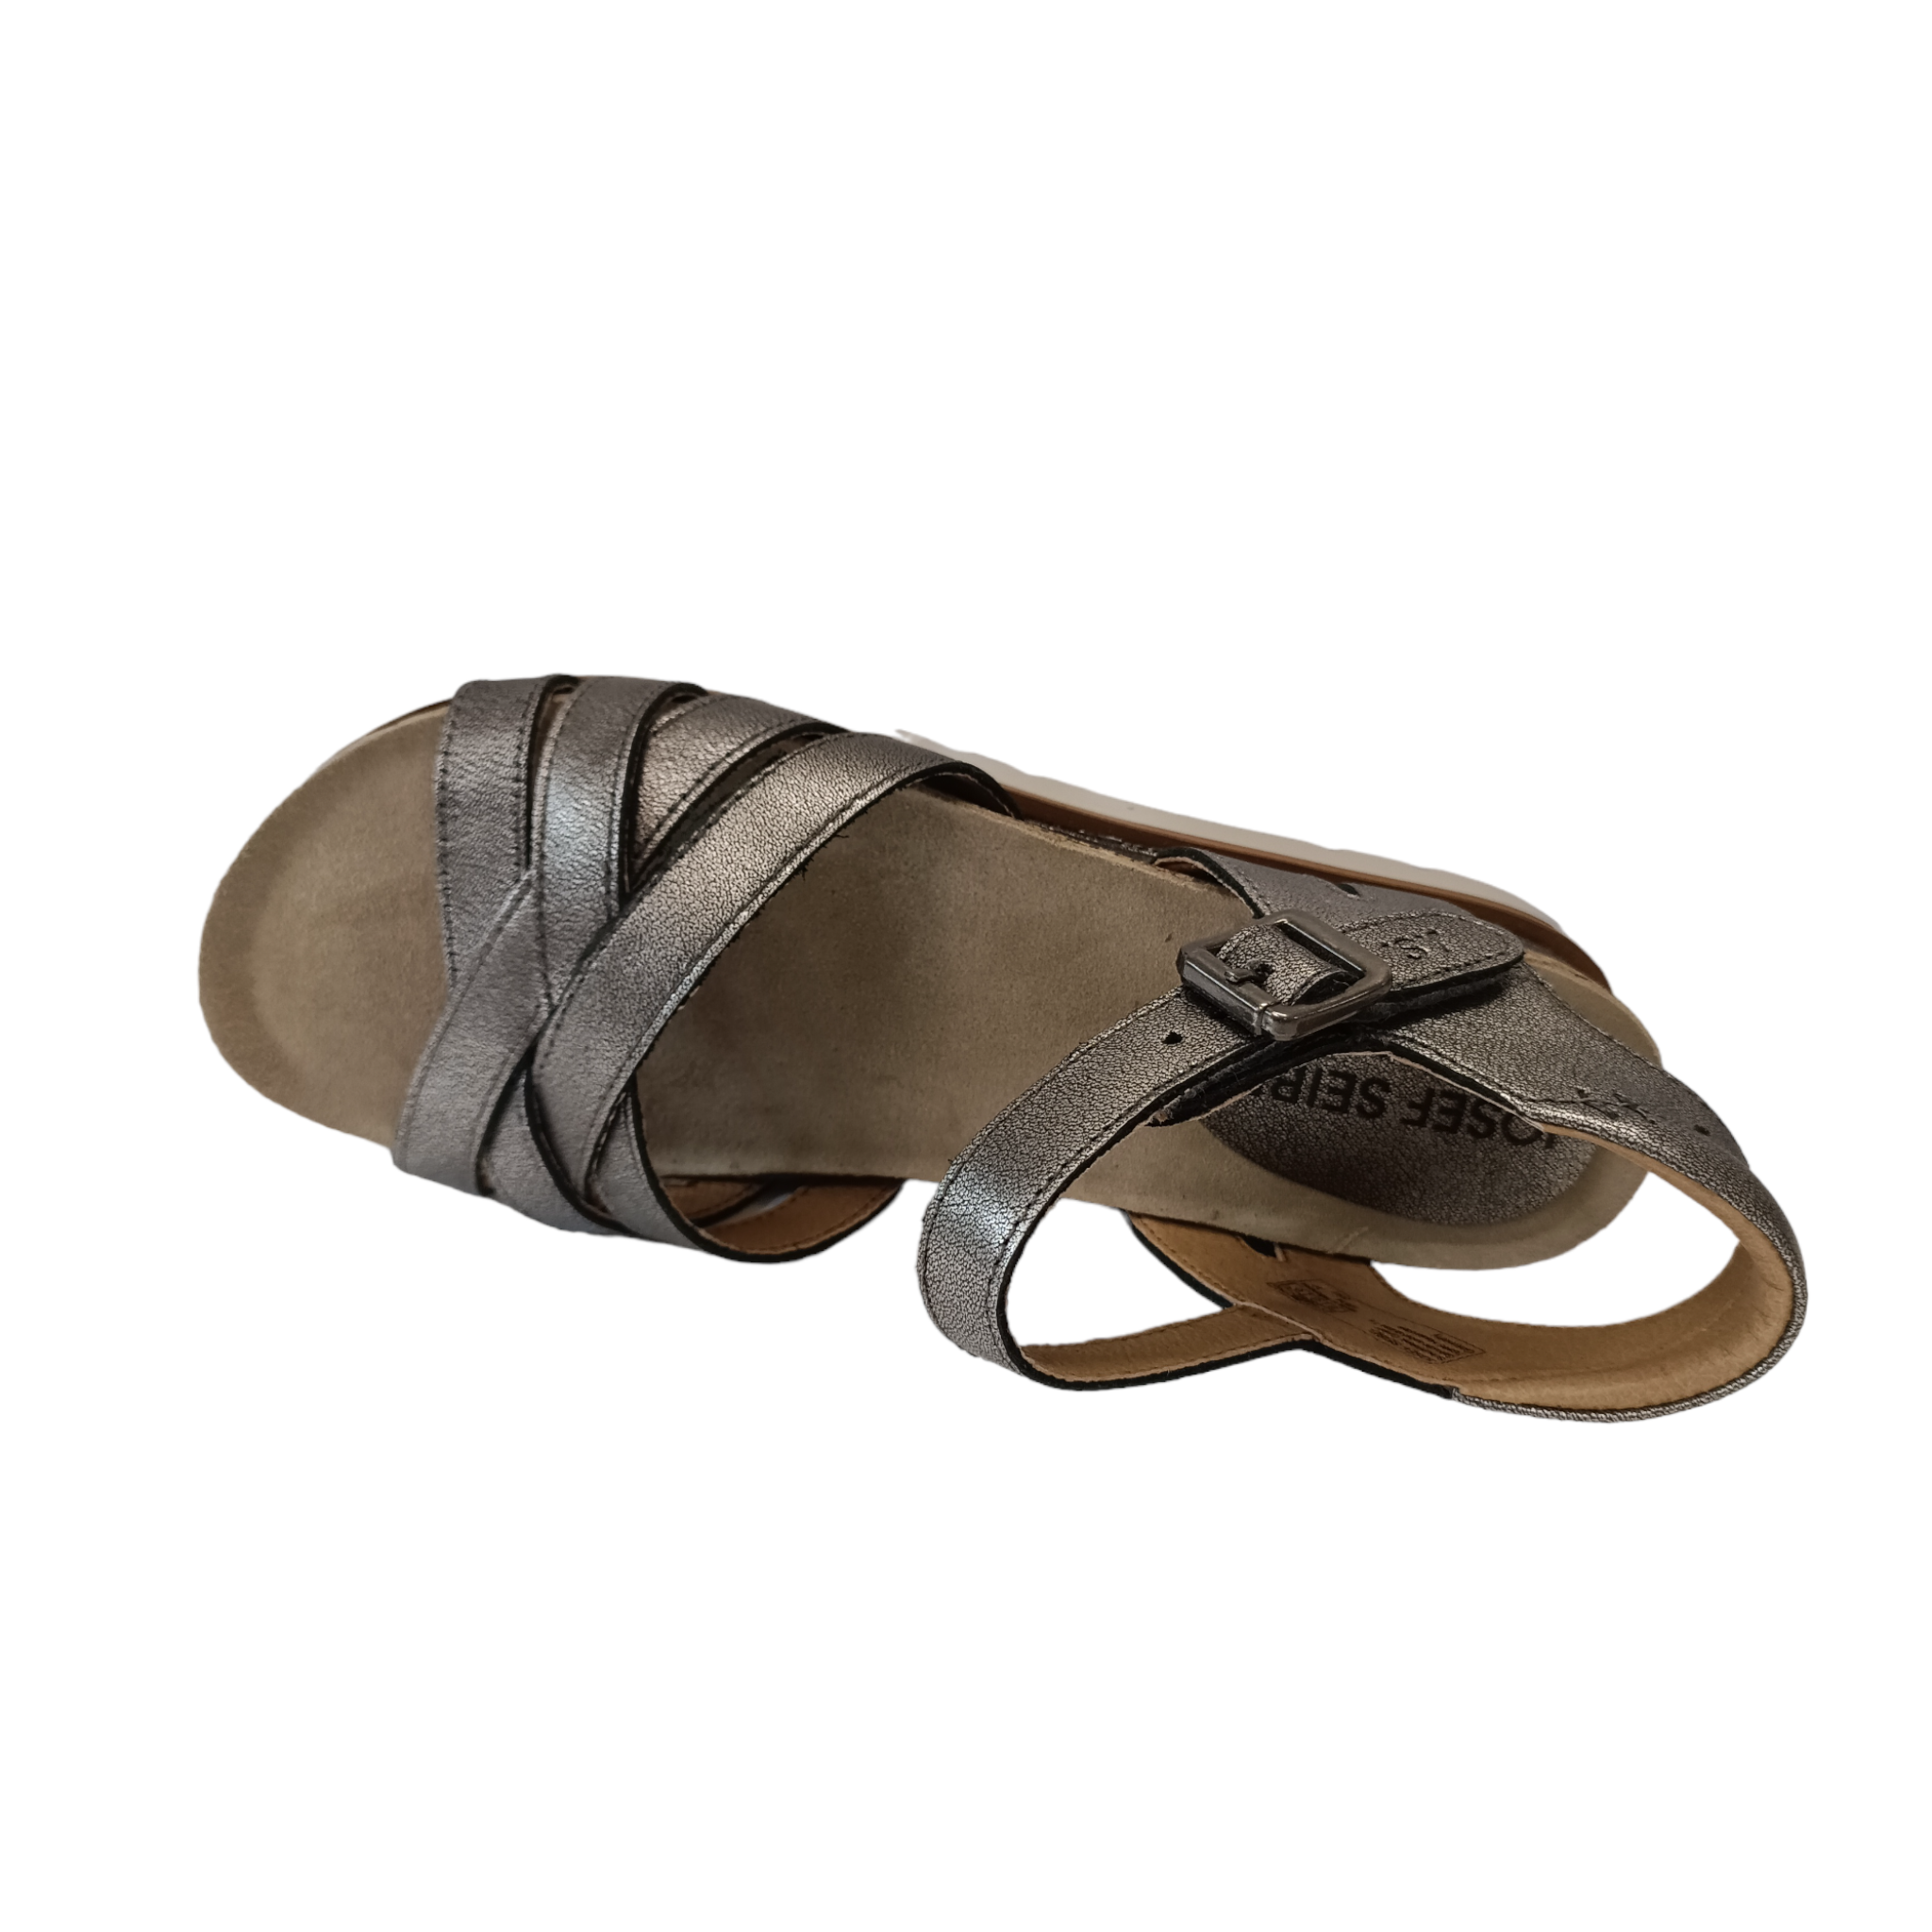 Clea 14 - shoe&amp;me - Josef Seibel - Sandal - Sandals, Summer, Wedges, Womens